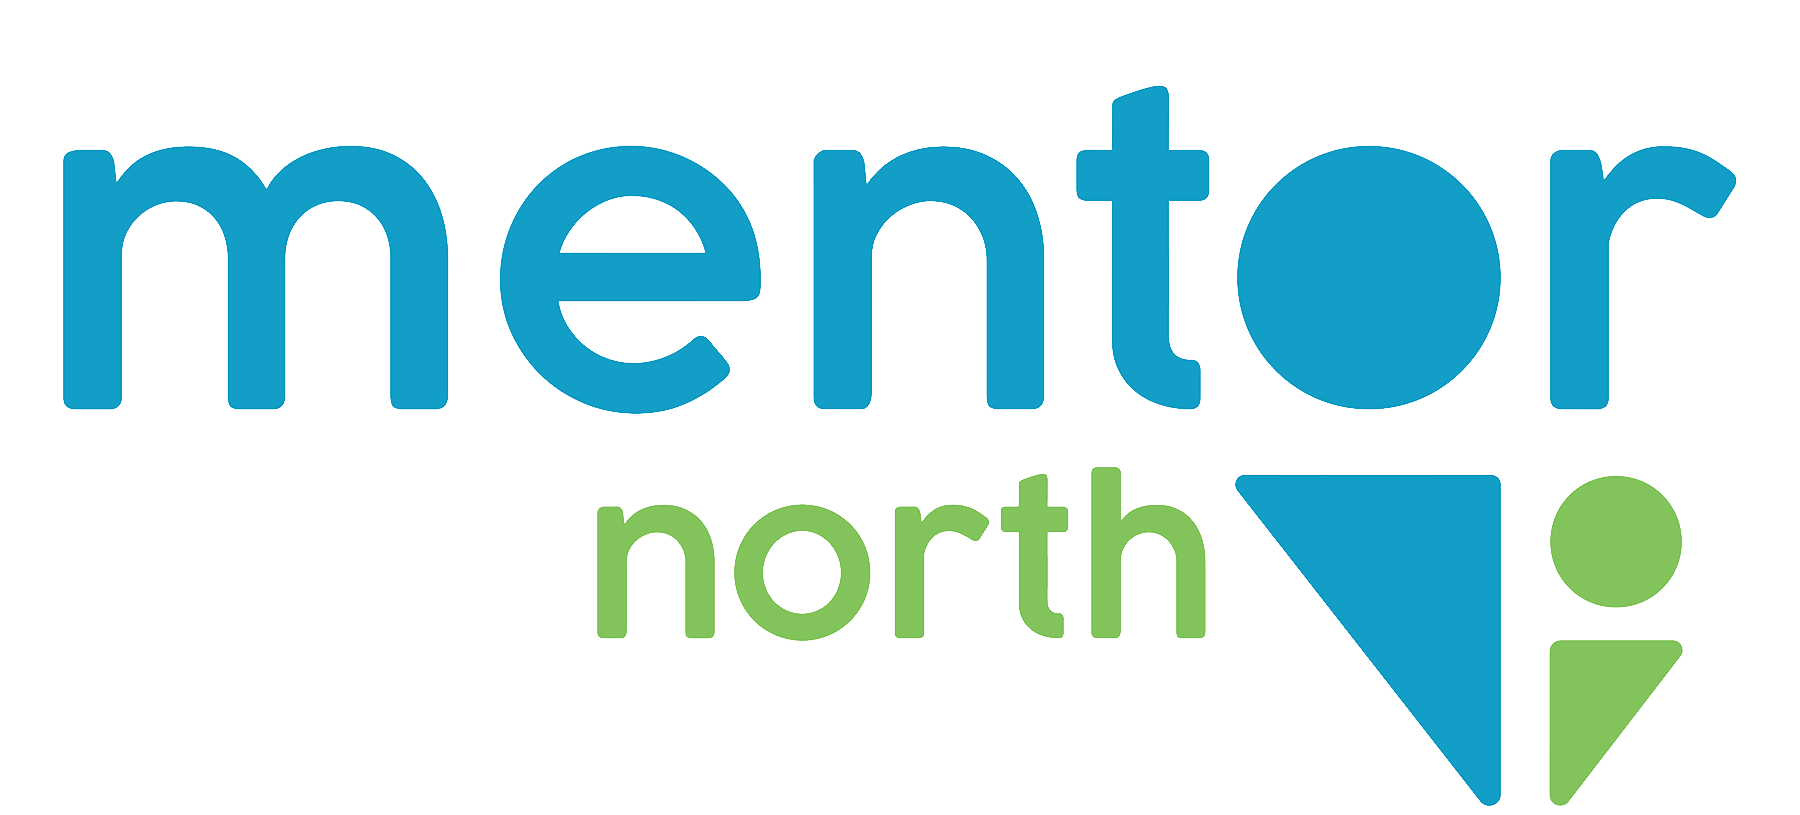 Mentor north logo.